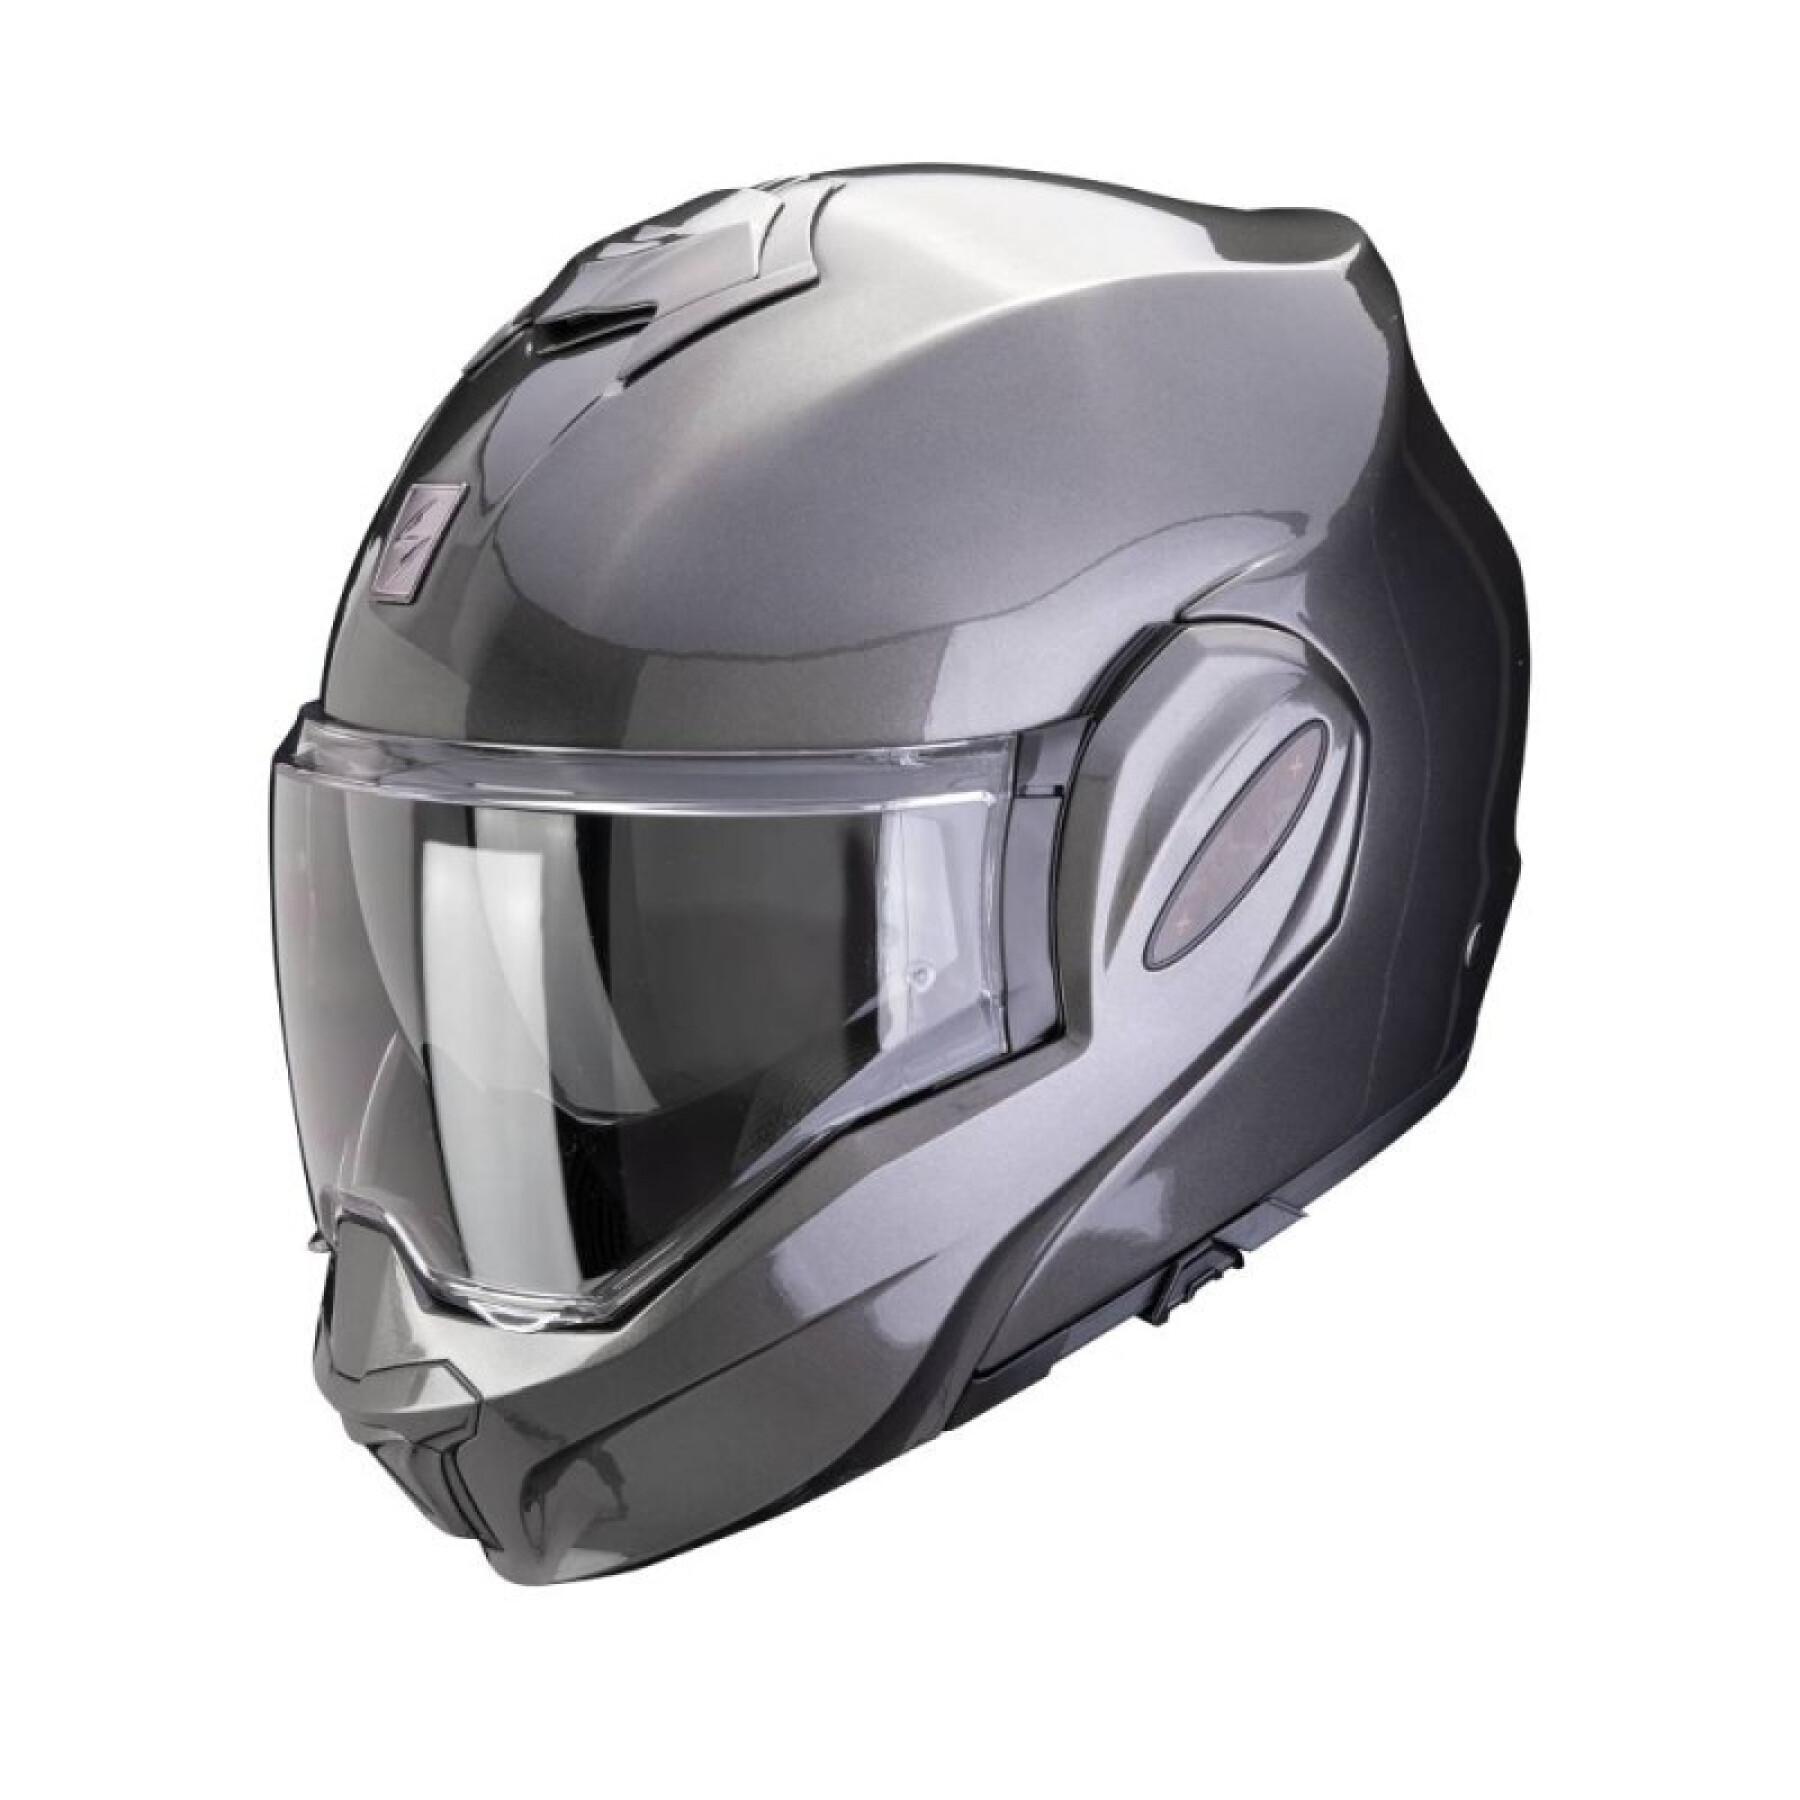 Modular motorcycle helmet Scorpion Exo-tech Evo Pro Solid